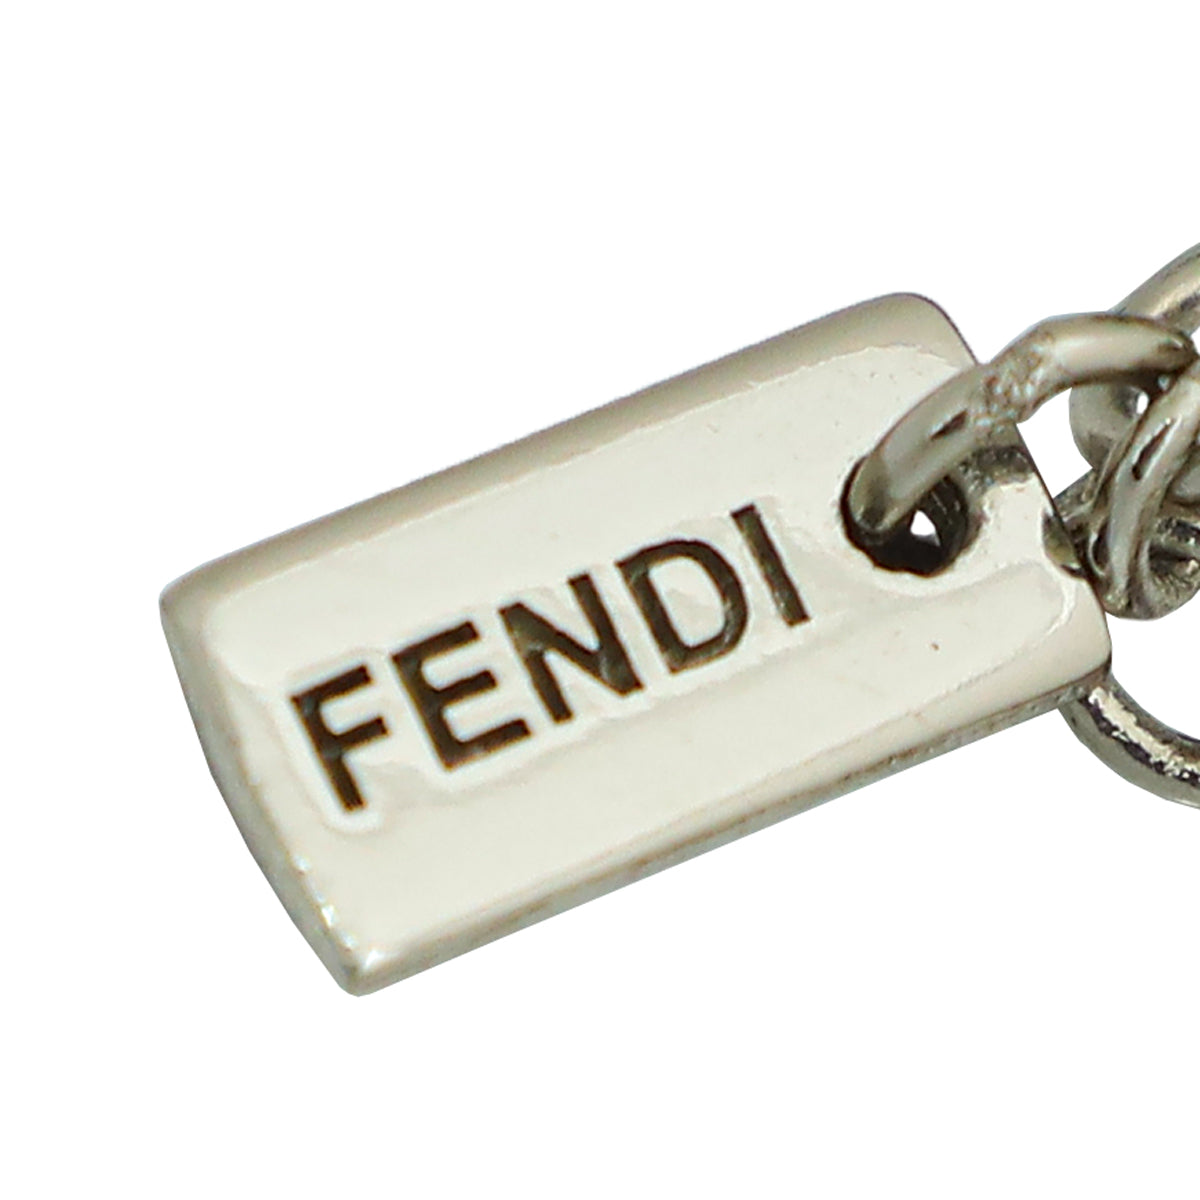 Fendi Silver Finish Baguette Medium Bracelet